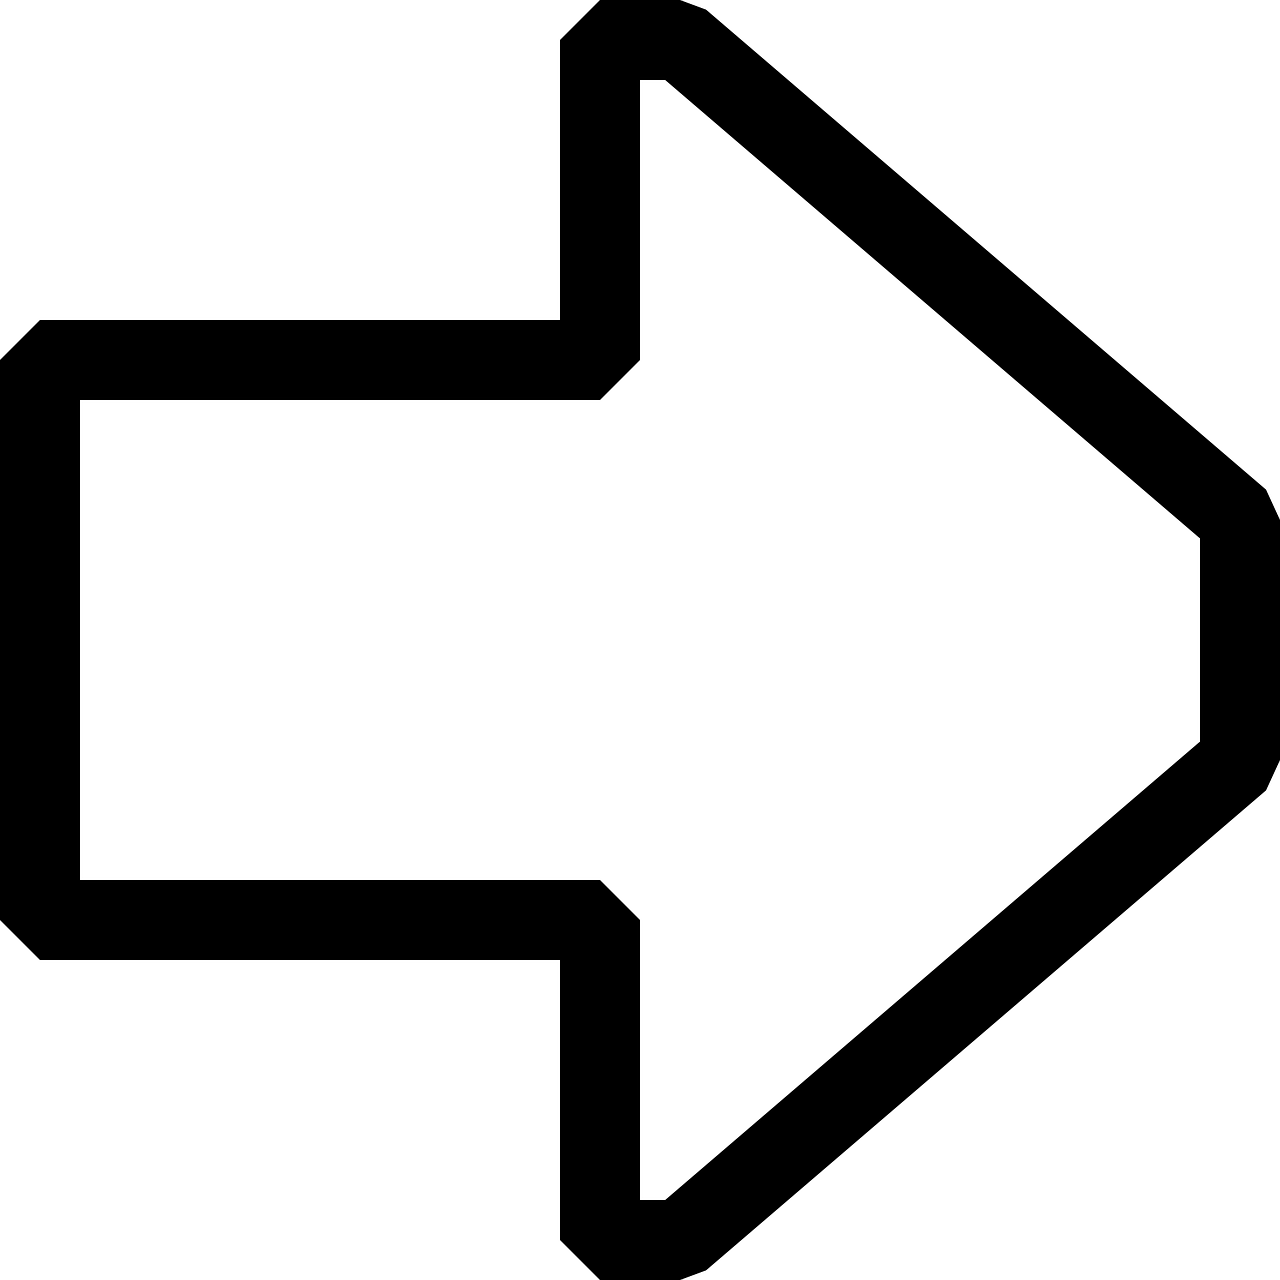 a black arrow pointing left on a white background, deviantart, computer art, outline, integration, form, orthogonal